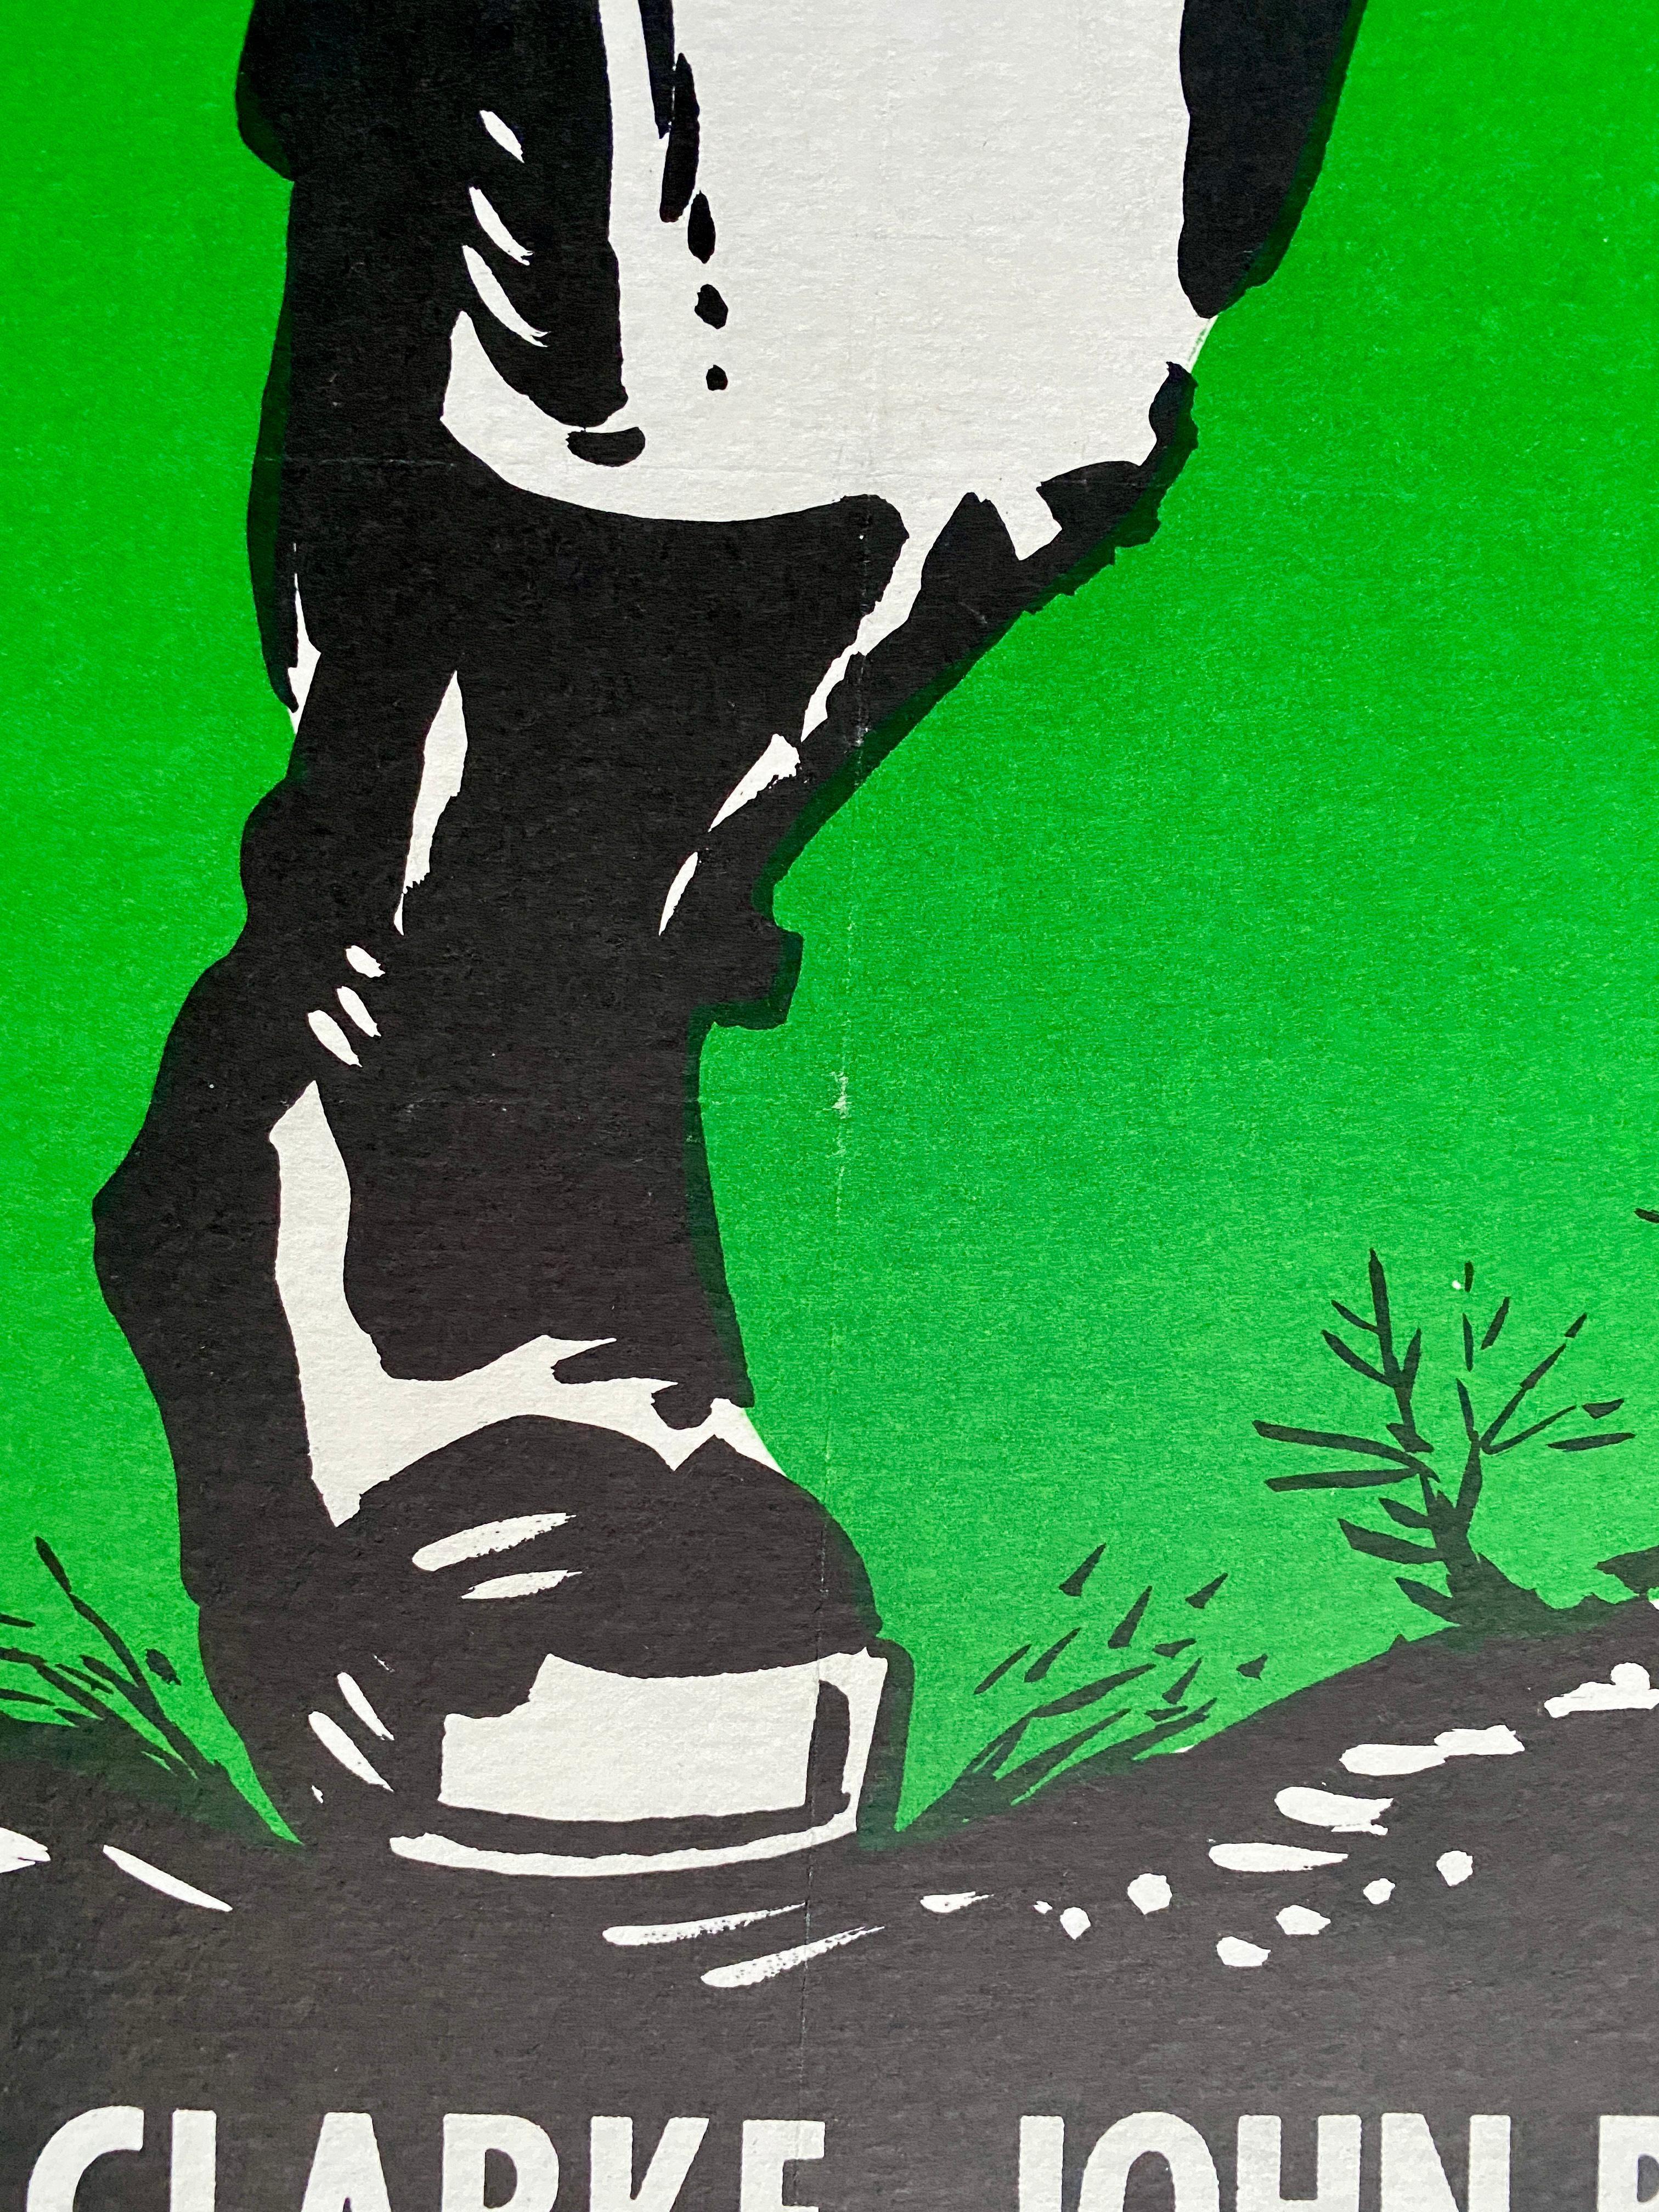 Paper 'Frankenstein' Original Vintage US One Sheet Movie Poster, 1960s